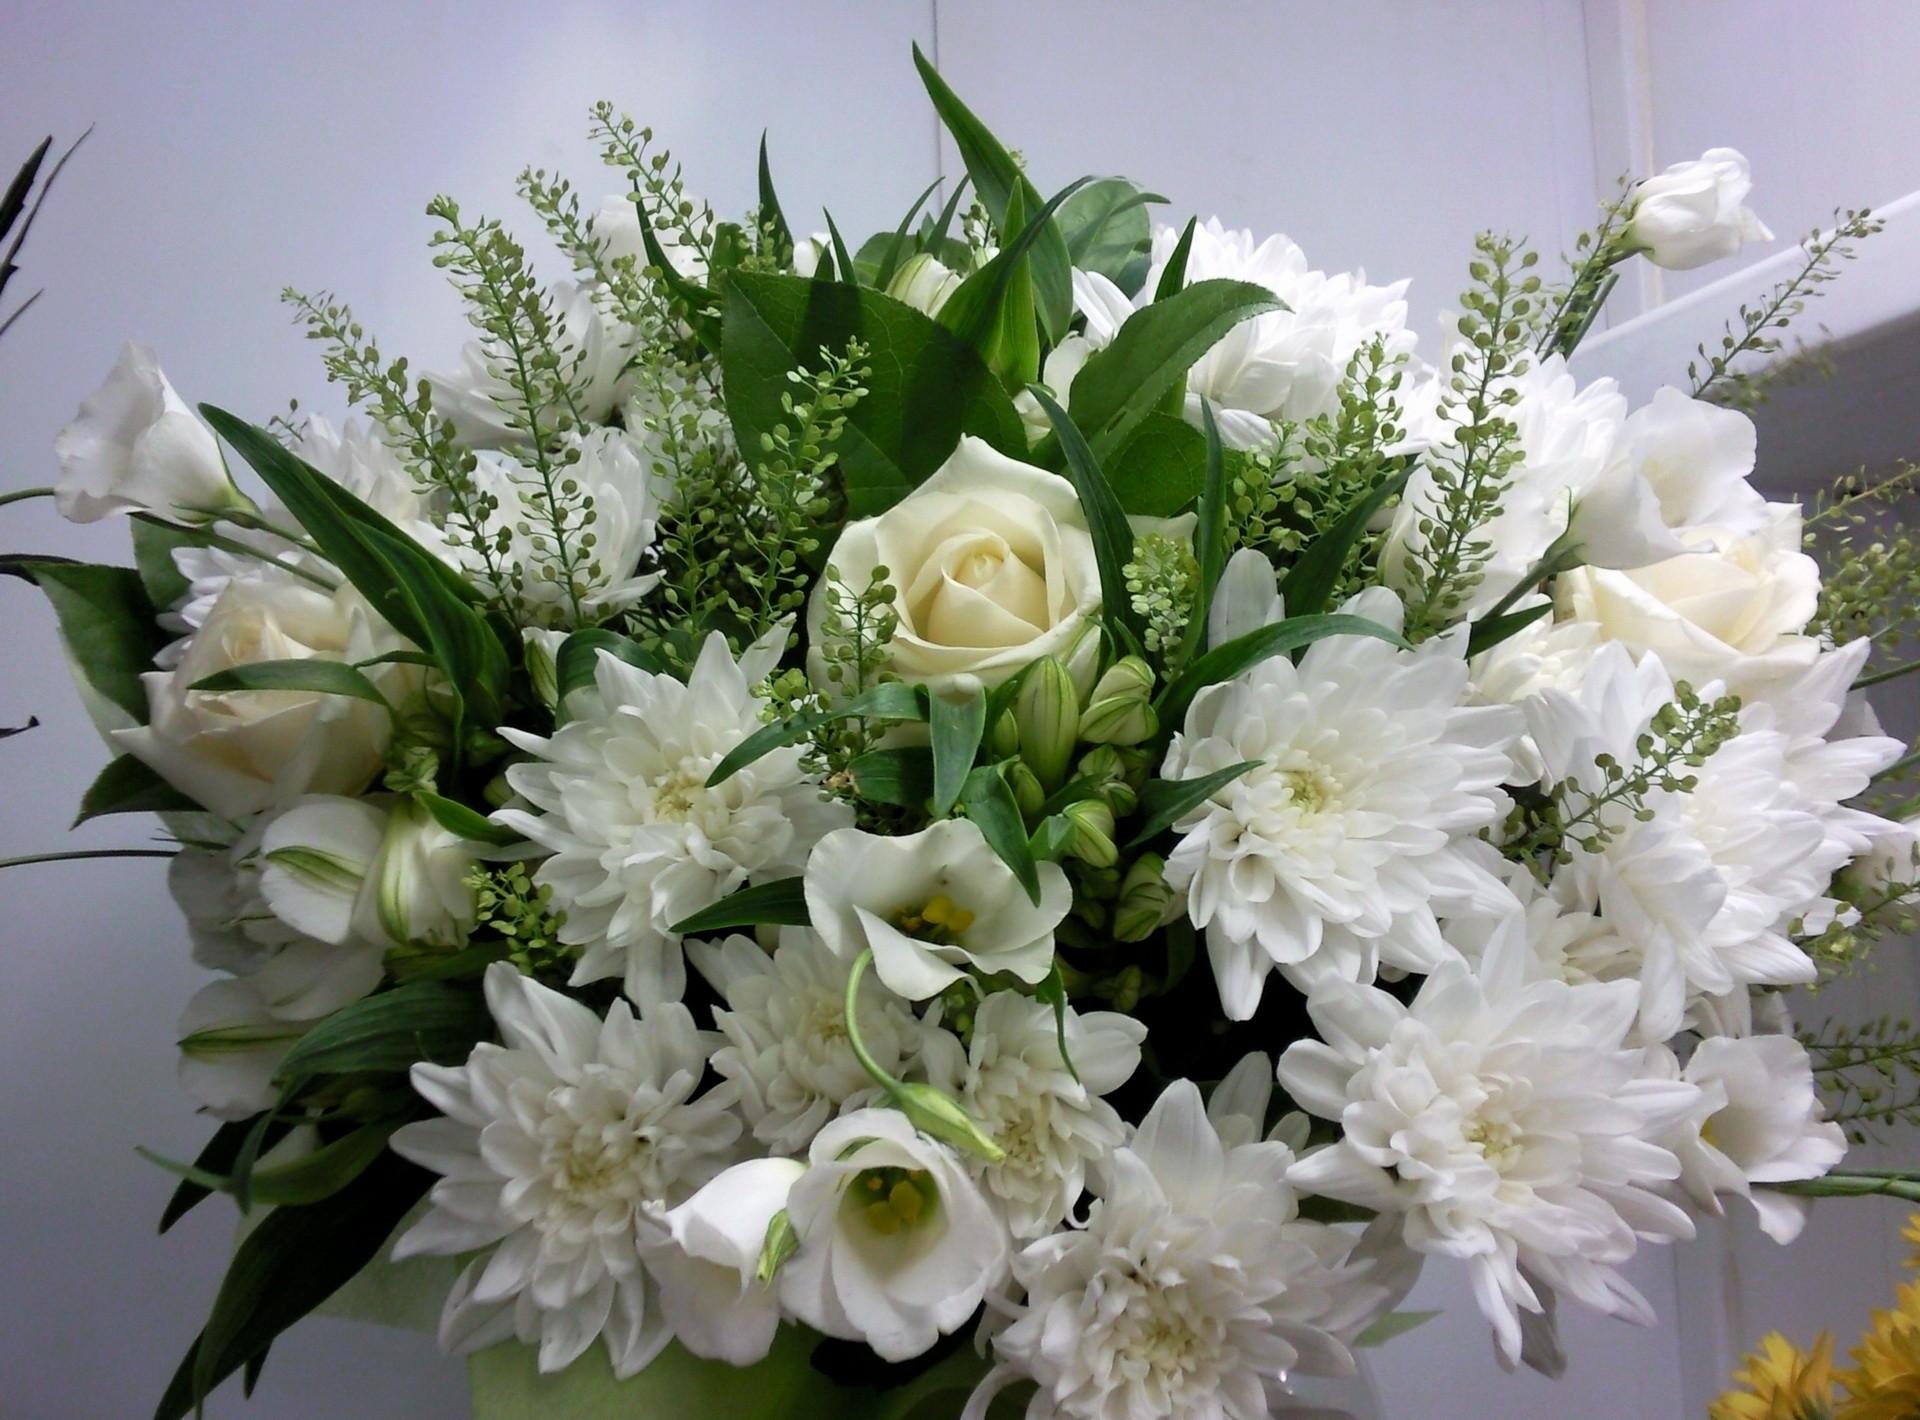 bouquet, roses, flowers, chrysanthemum, white, snow white